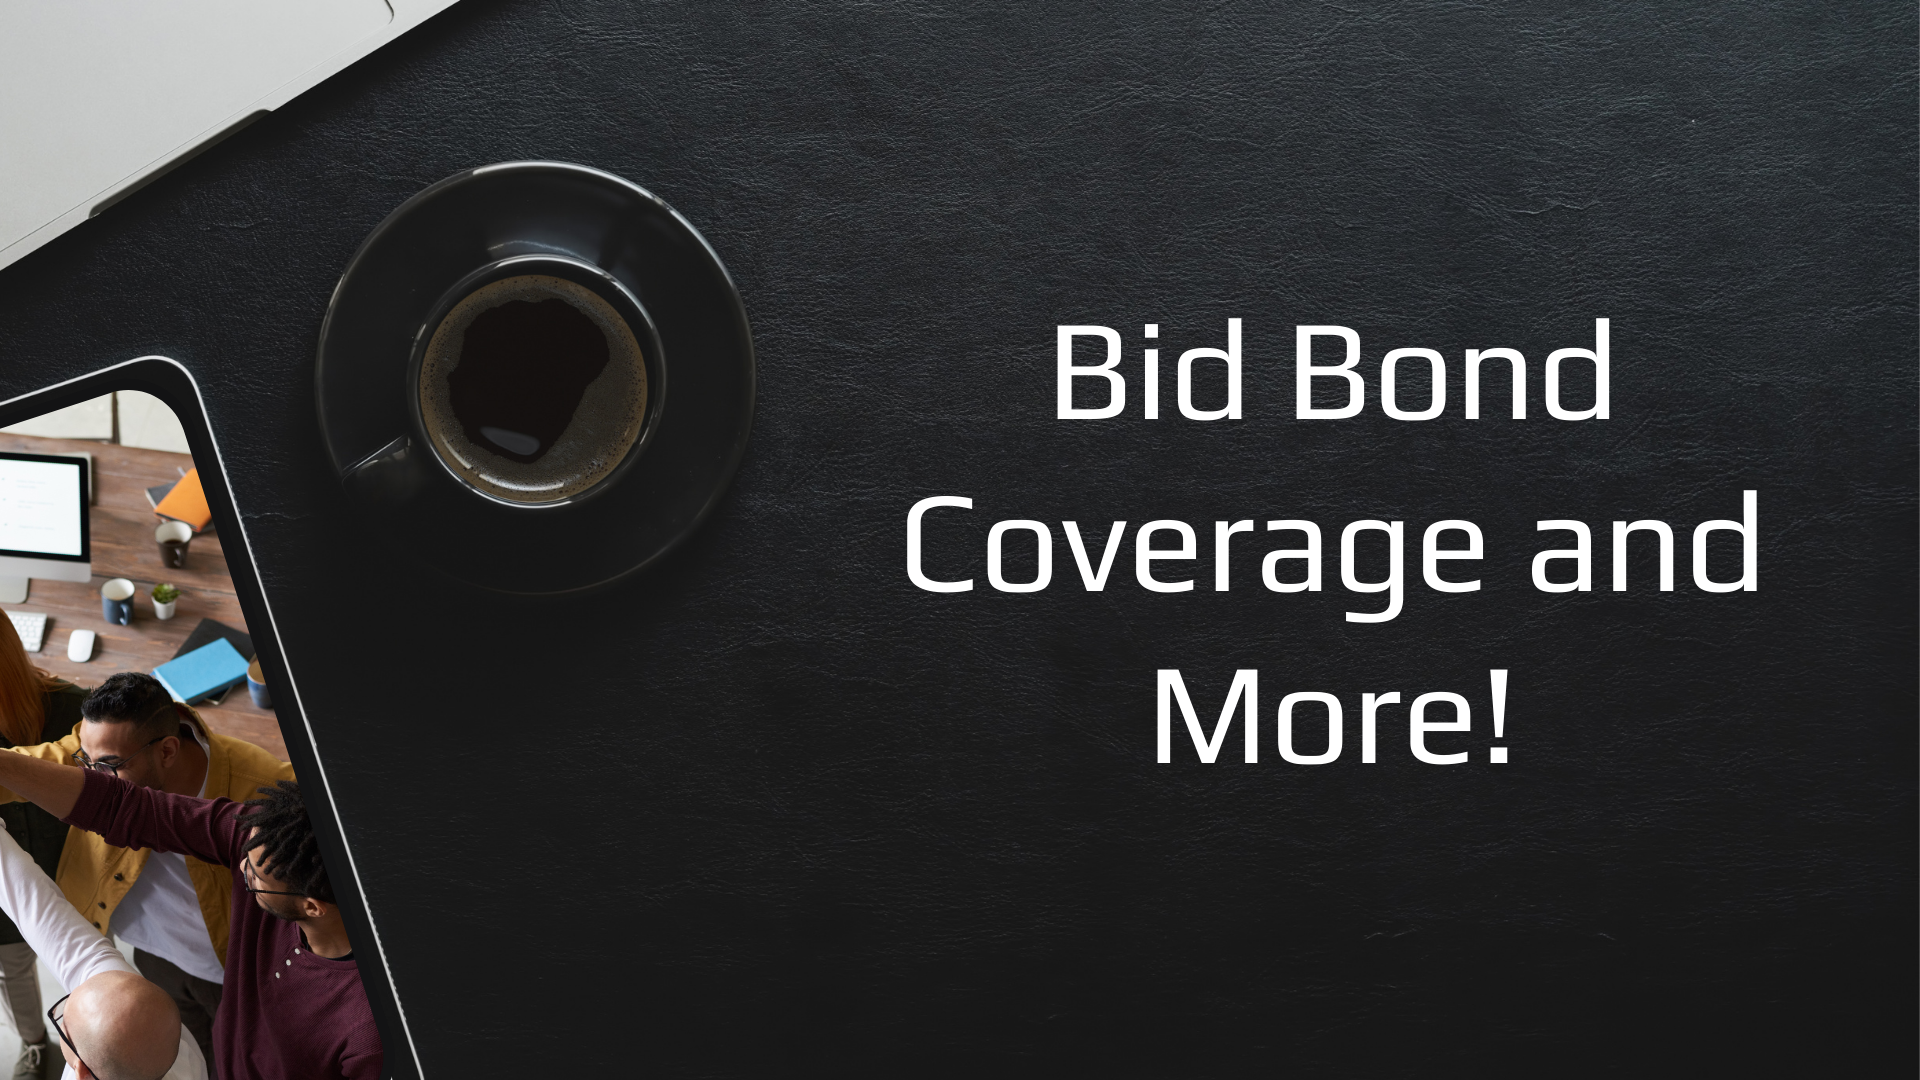 bid bond - What is the scope of a bid bond - black theme